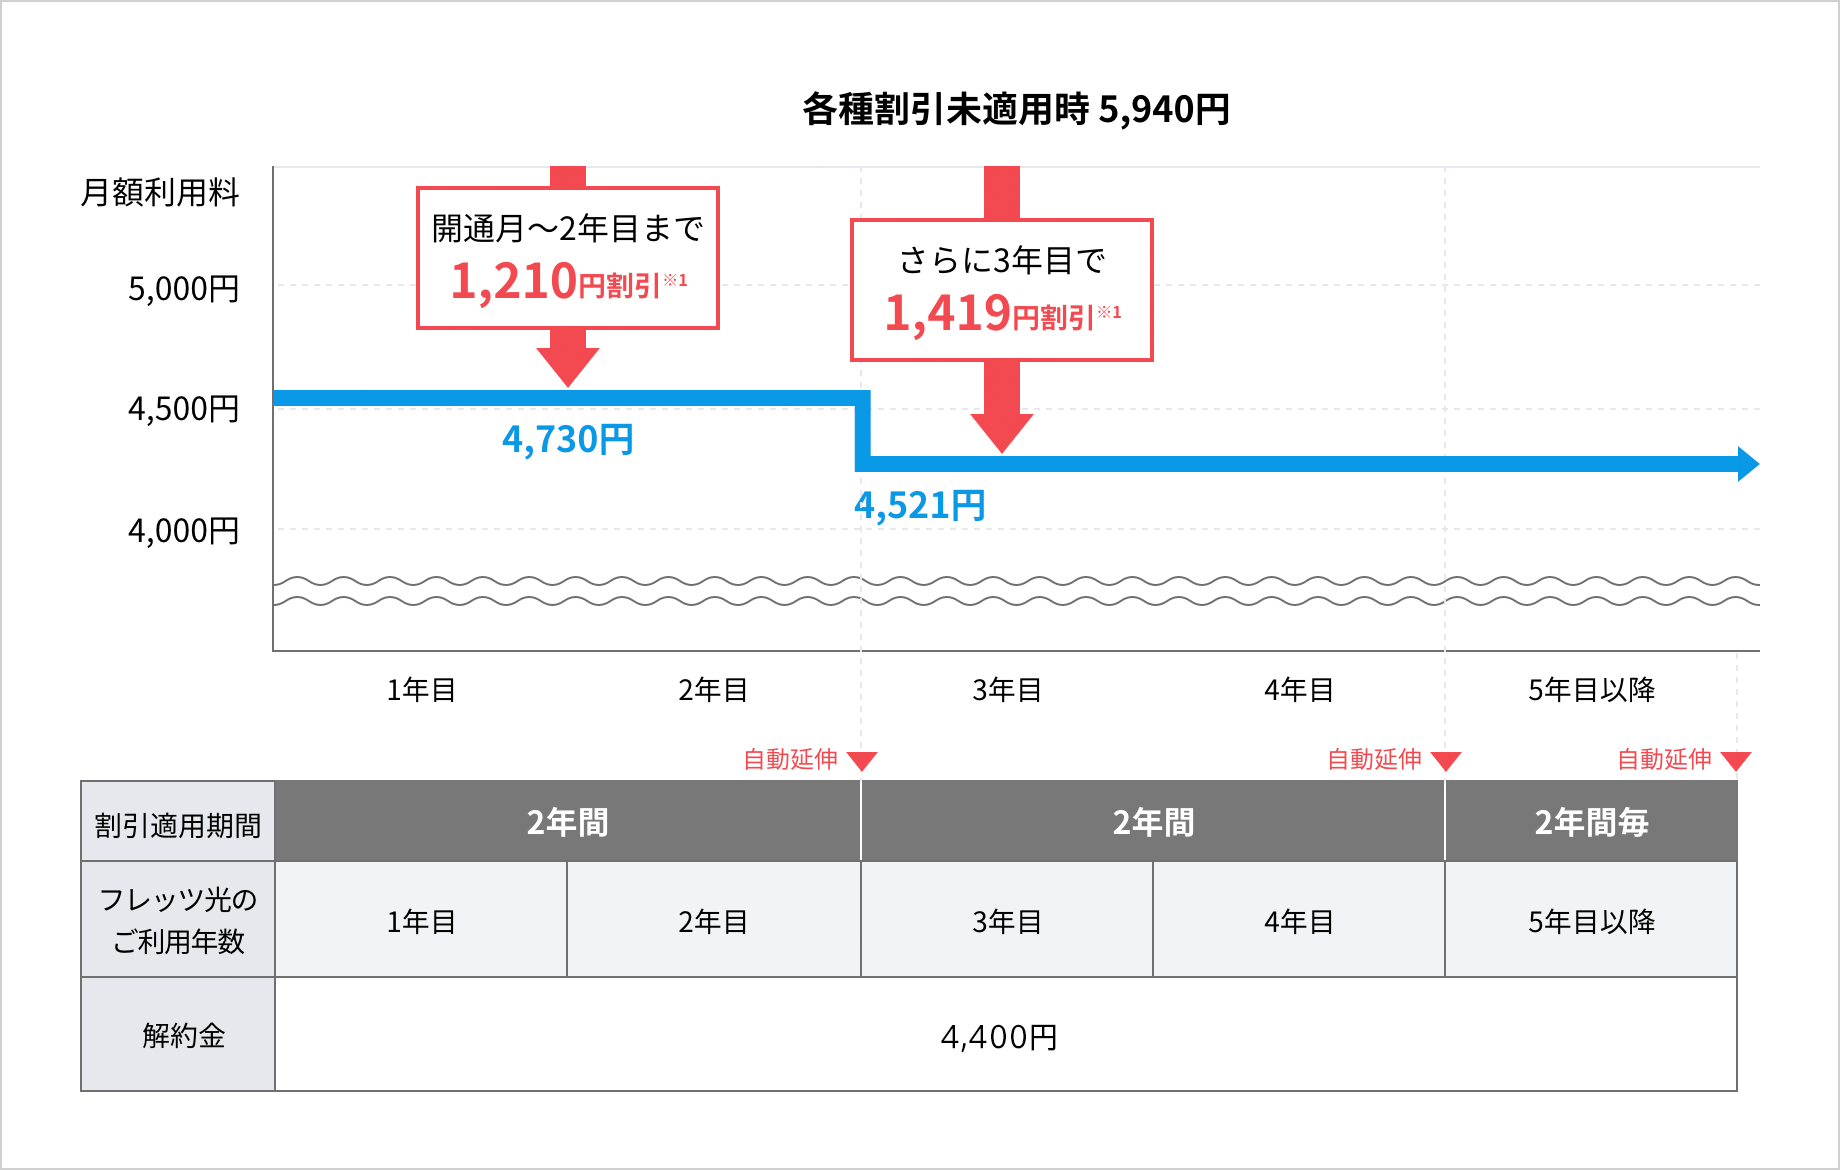 Ntt西日本 公式 フレッツ光 料金シミュレーション お申し込み